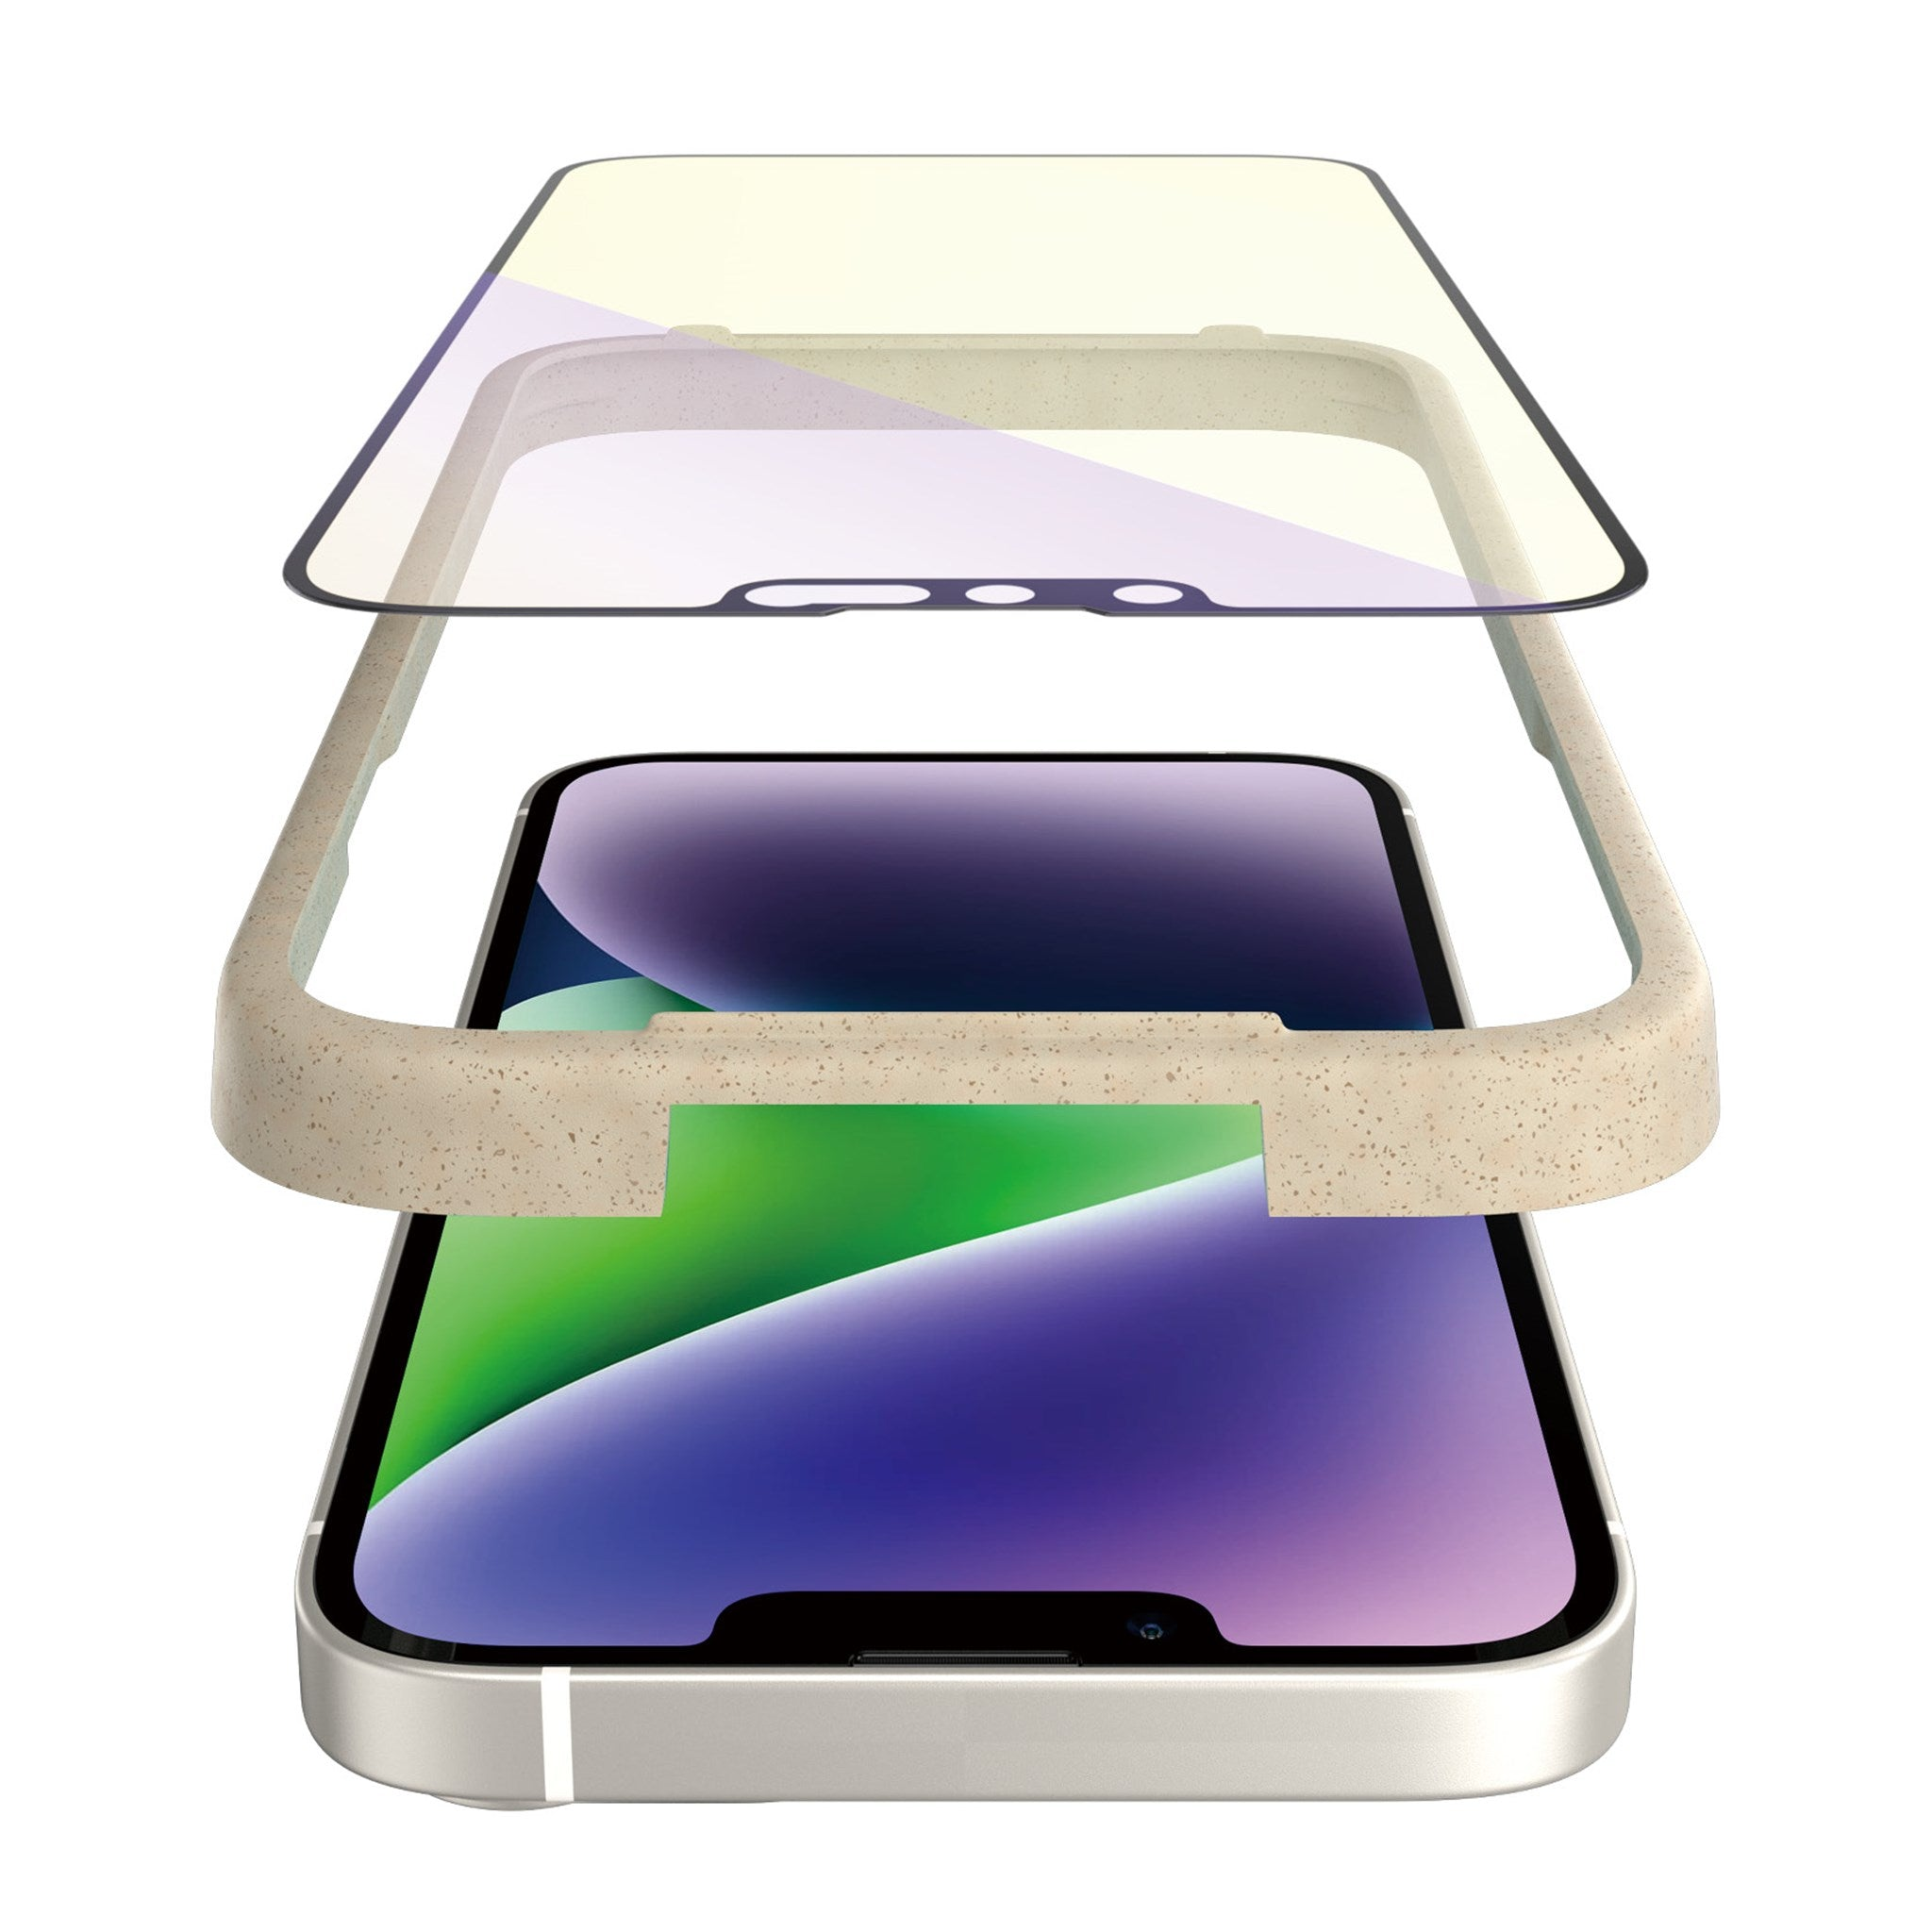 Plus 13 iPhone Fit Max) PANZERGLASS | Apple Displayschutz(für iPhone 14 Pro Ultra-Wide